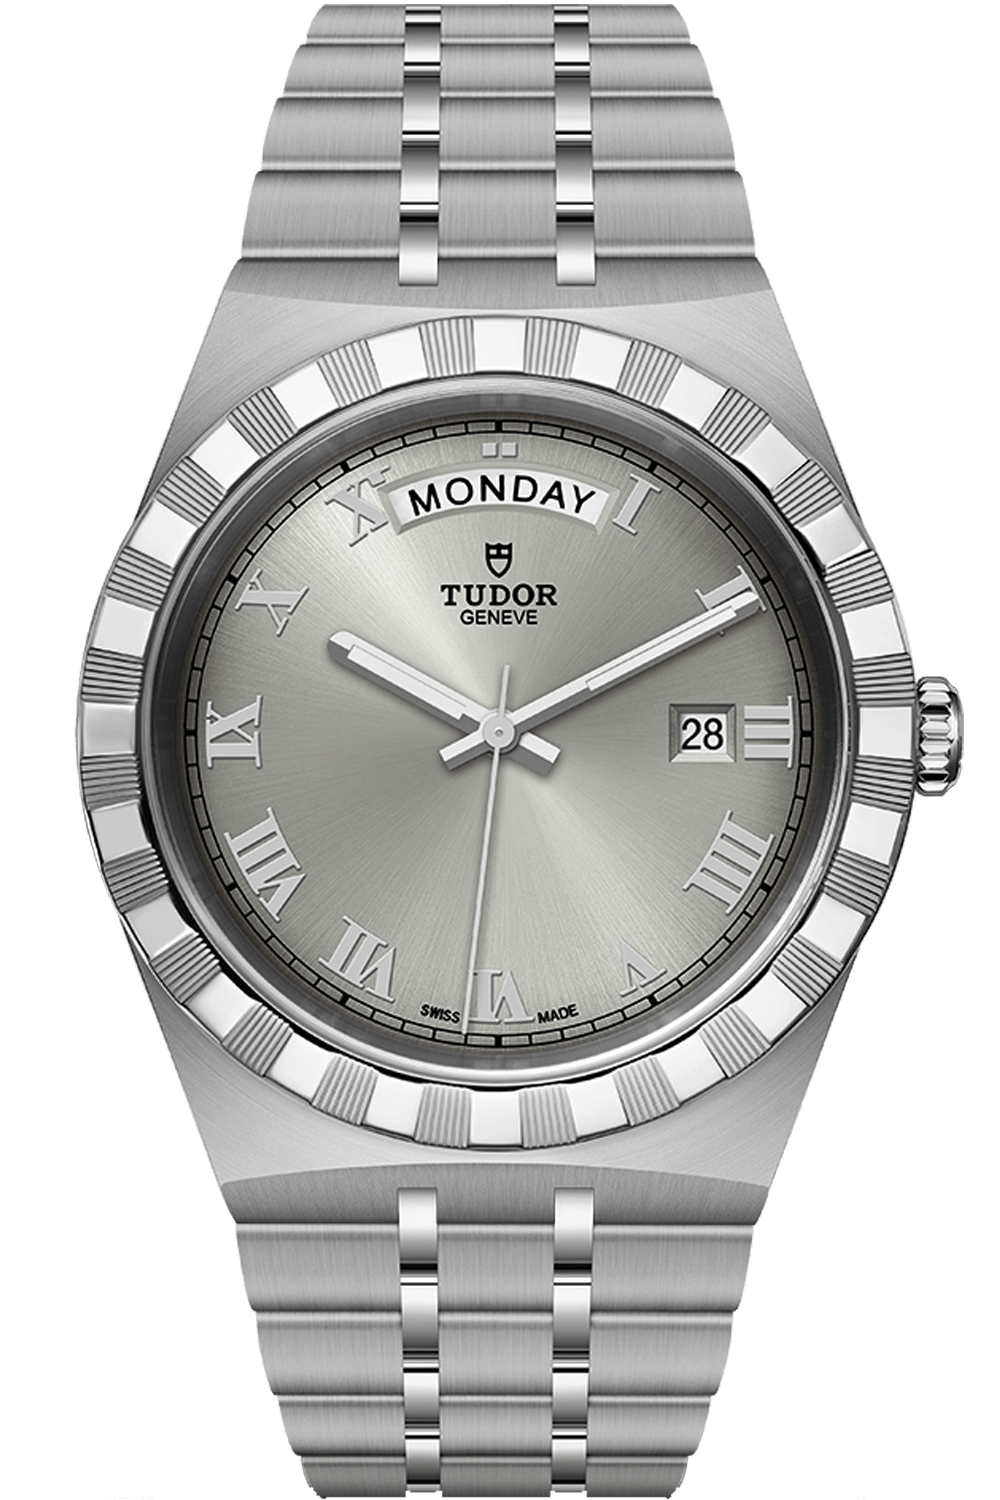 Tudor Royal Ref - M28600-0001